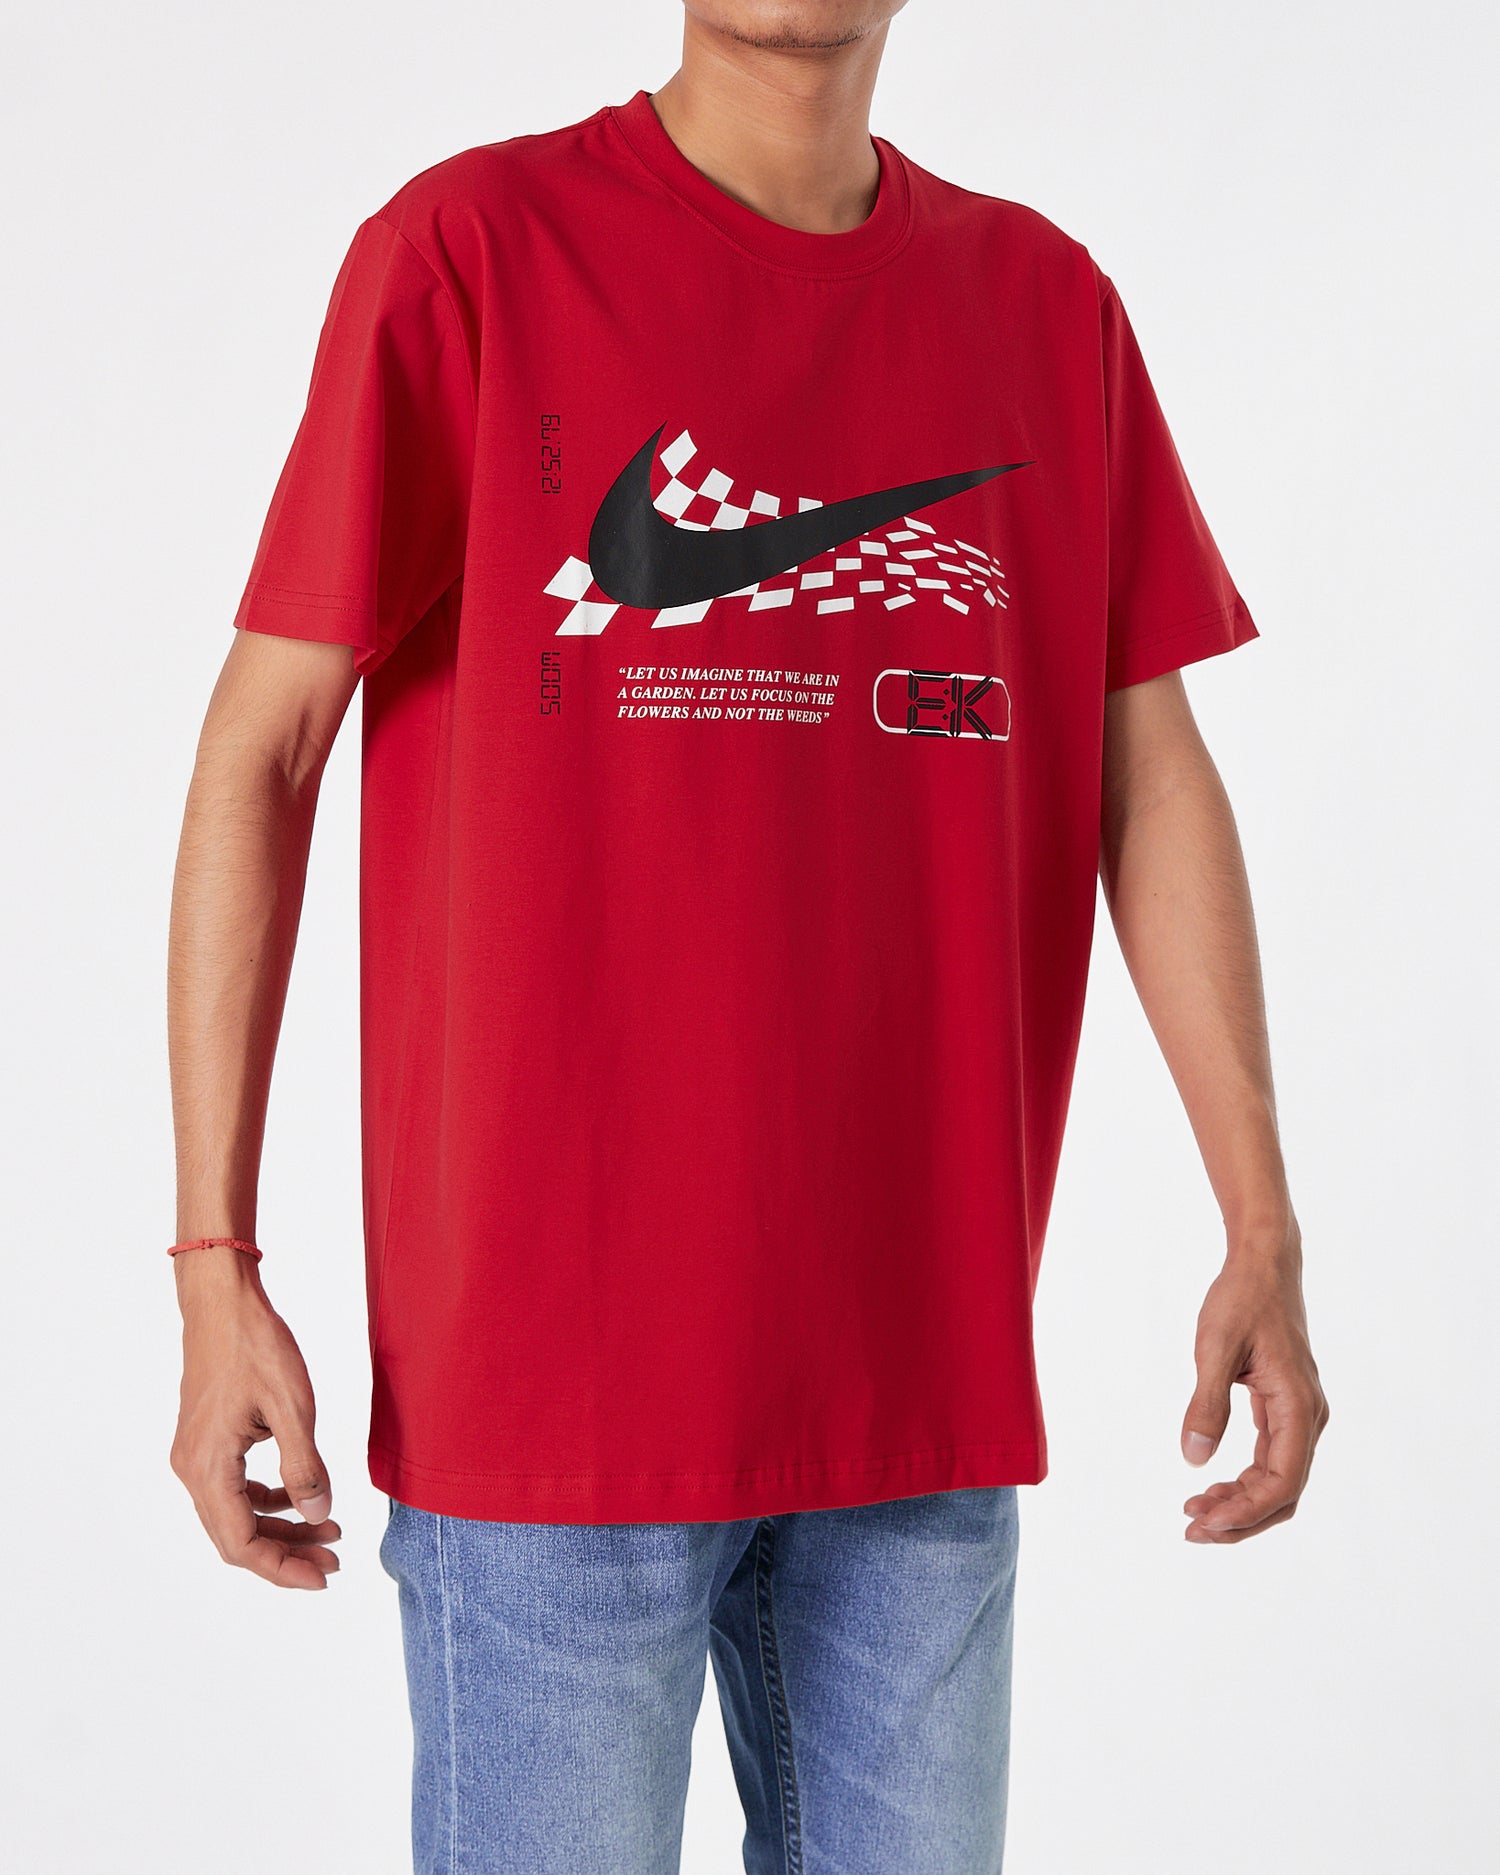 NIK Swooh Logo Printed Men Red T-Shirt 16.90